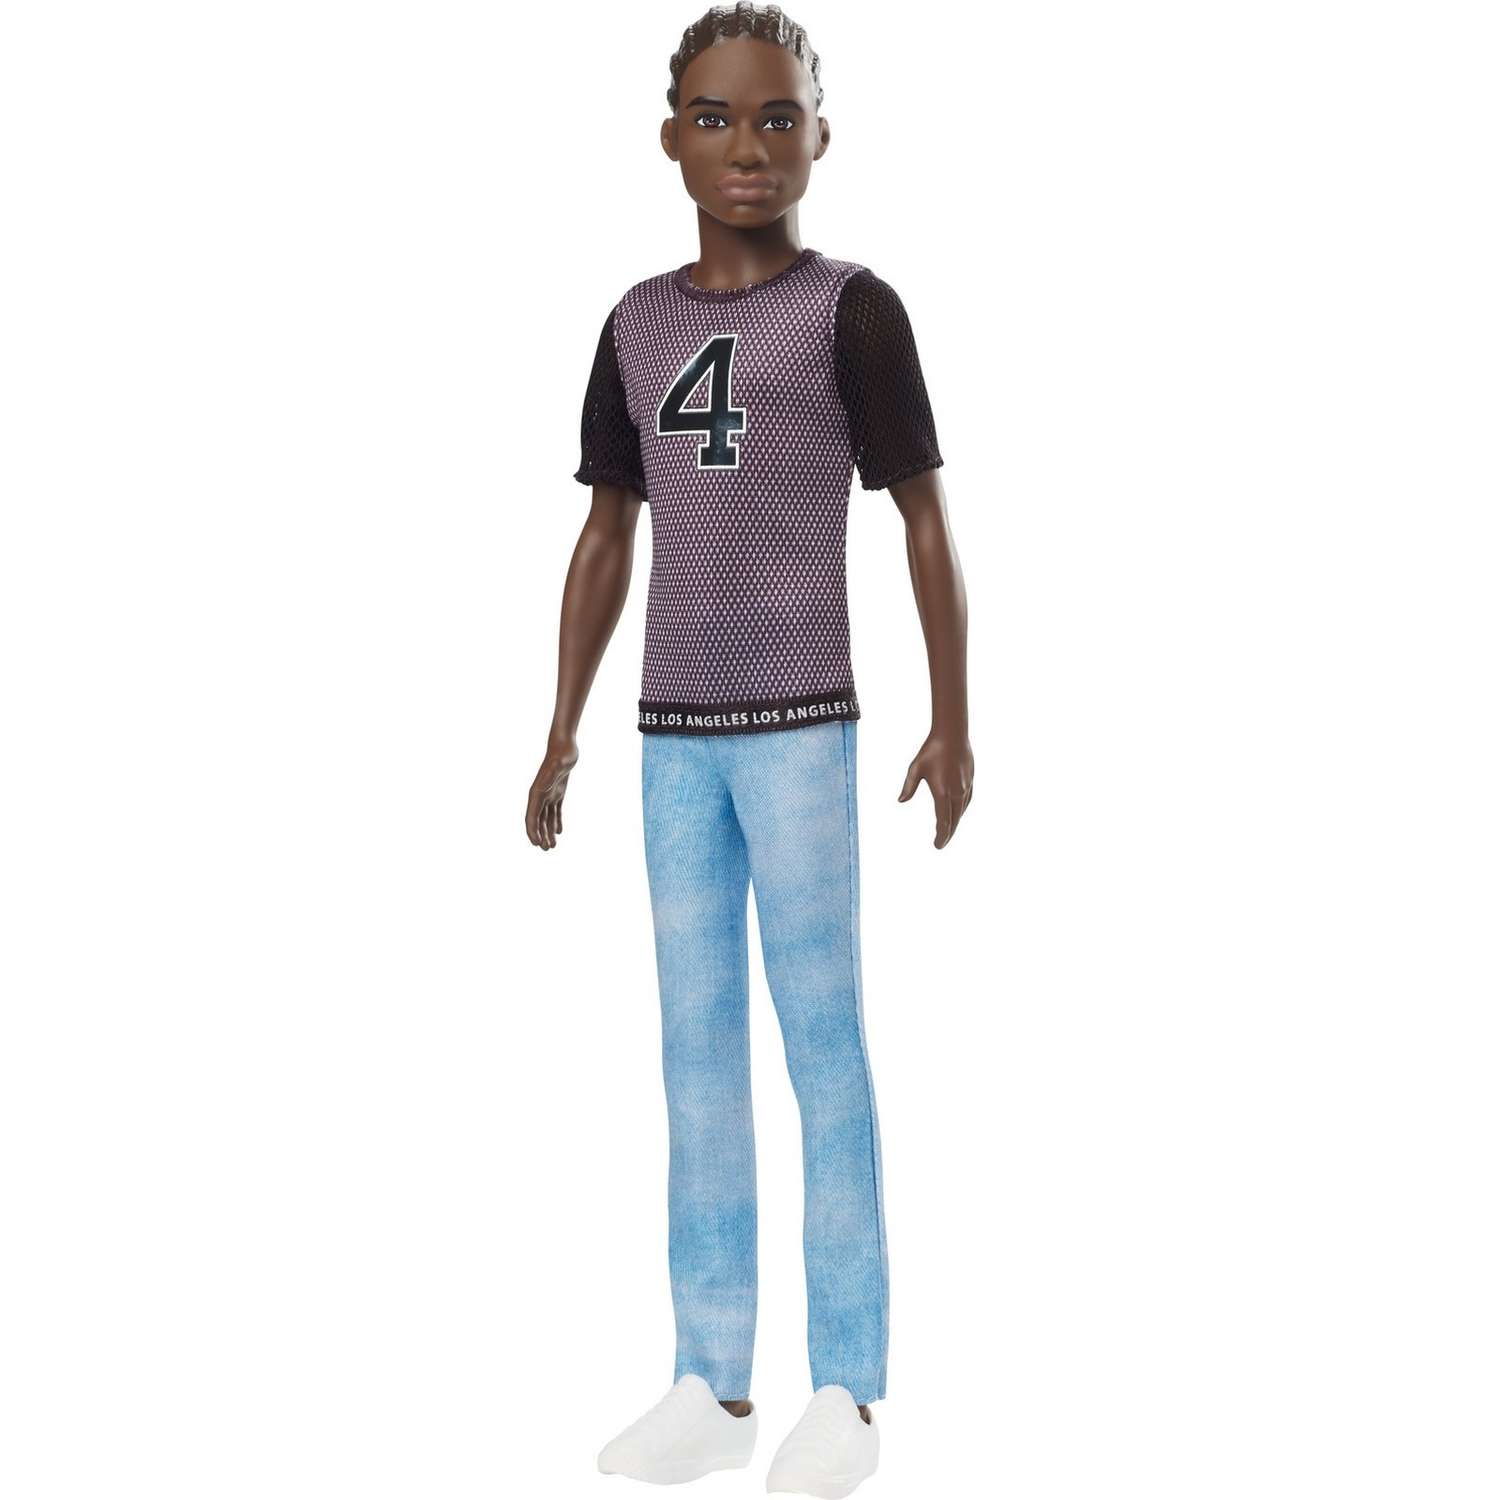 Кукла Barbie Игра с модой Кен в футболке и джинсах GDV13 DWK44 - фото 1